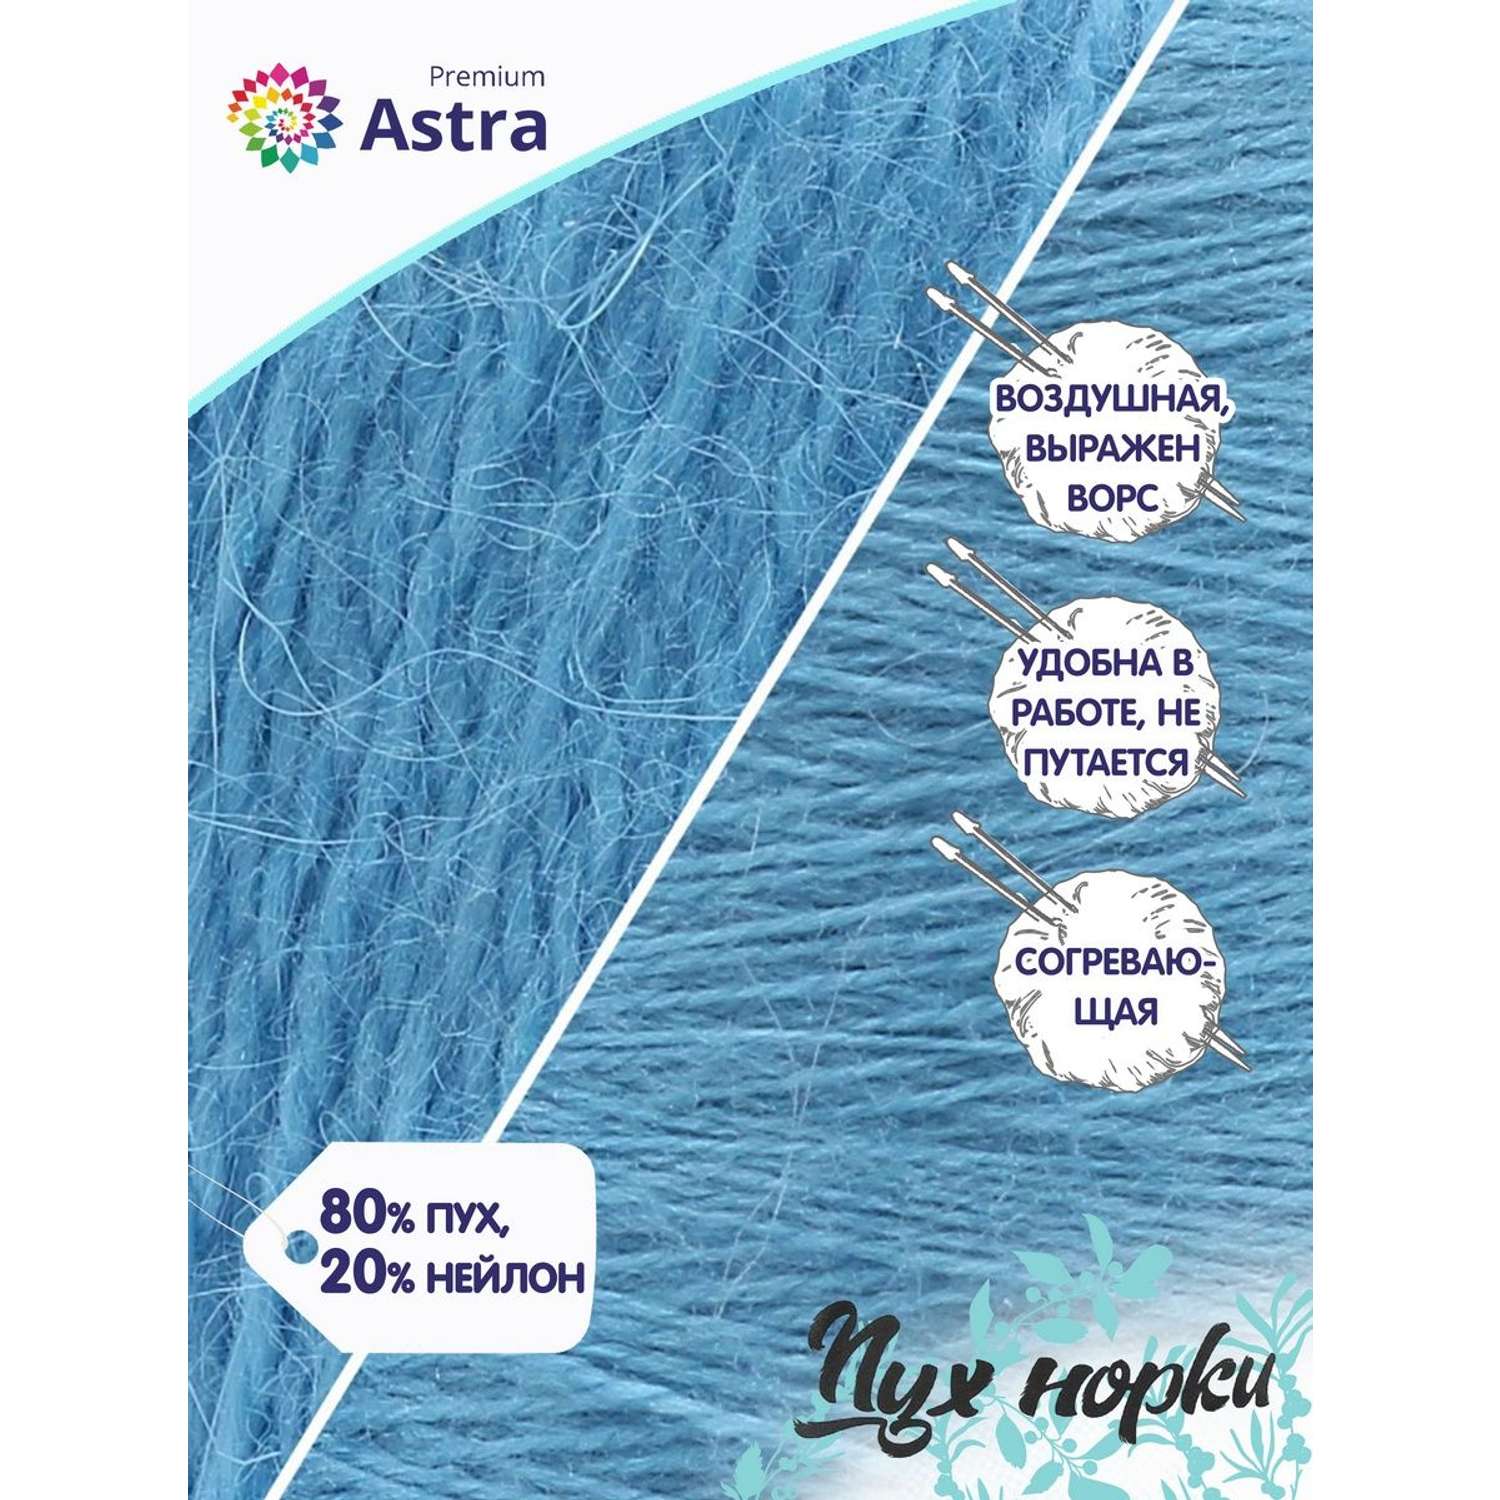 Пряжа Astra Premium Пух норки Mink yarn воздушная с ворсом 50 г 290 м 068 голубой 1 моток - фото 2